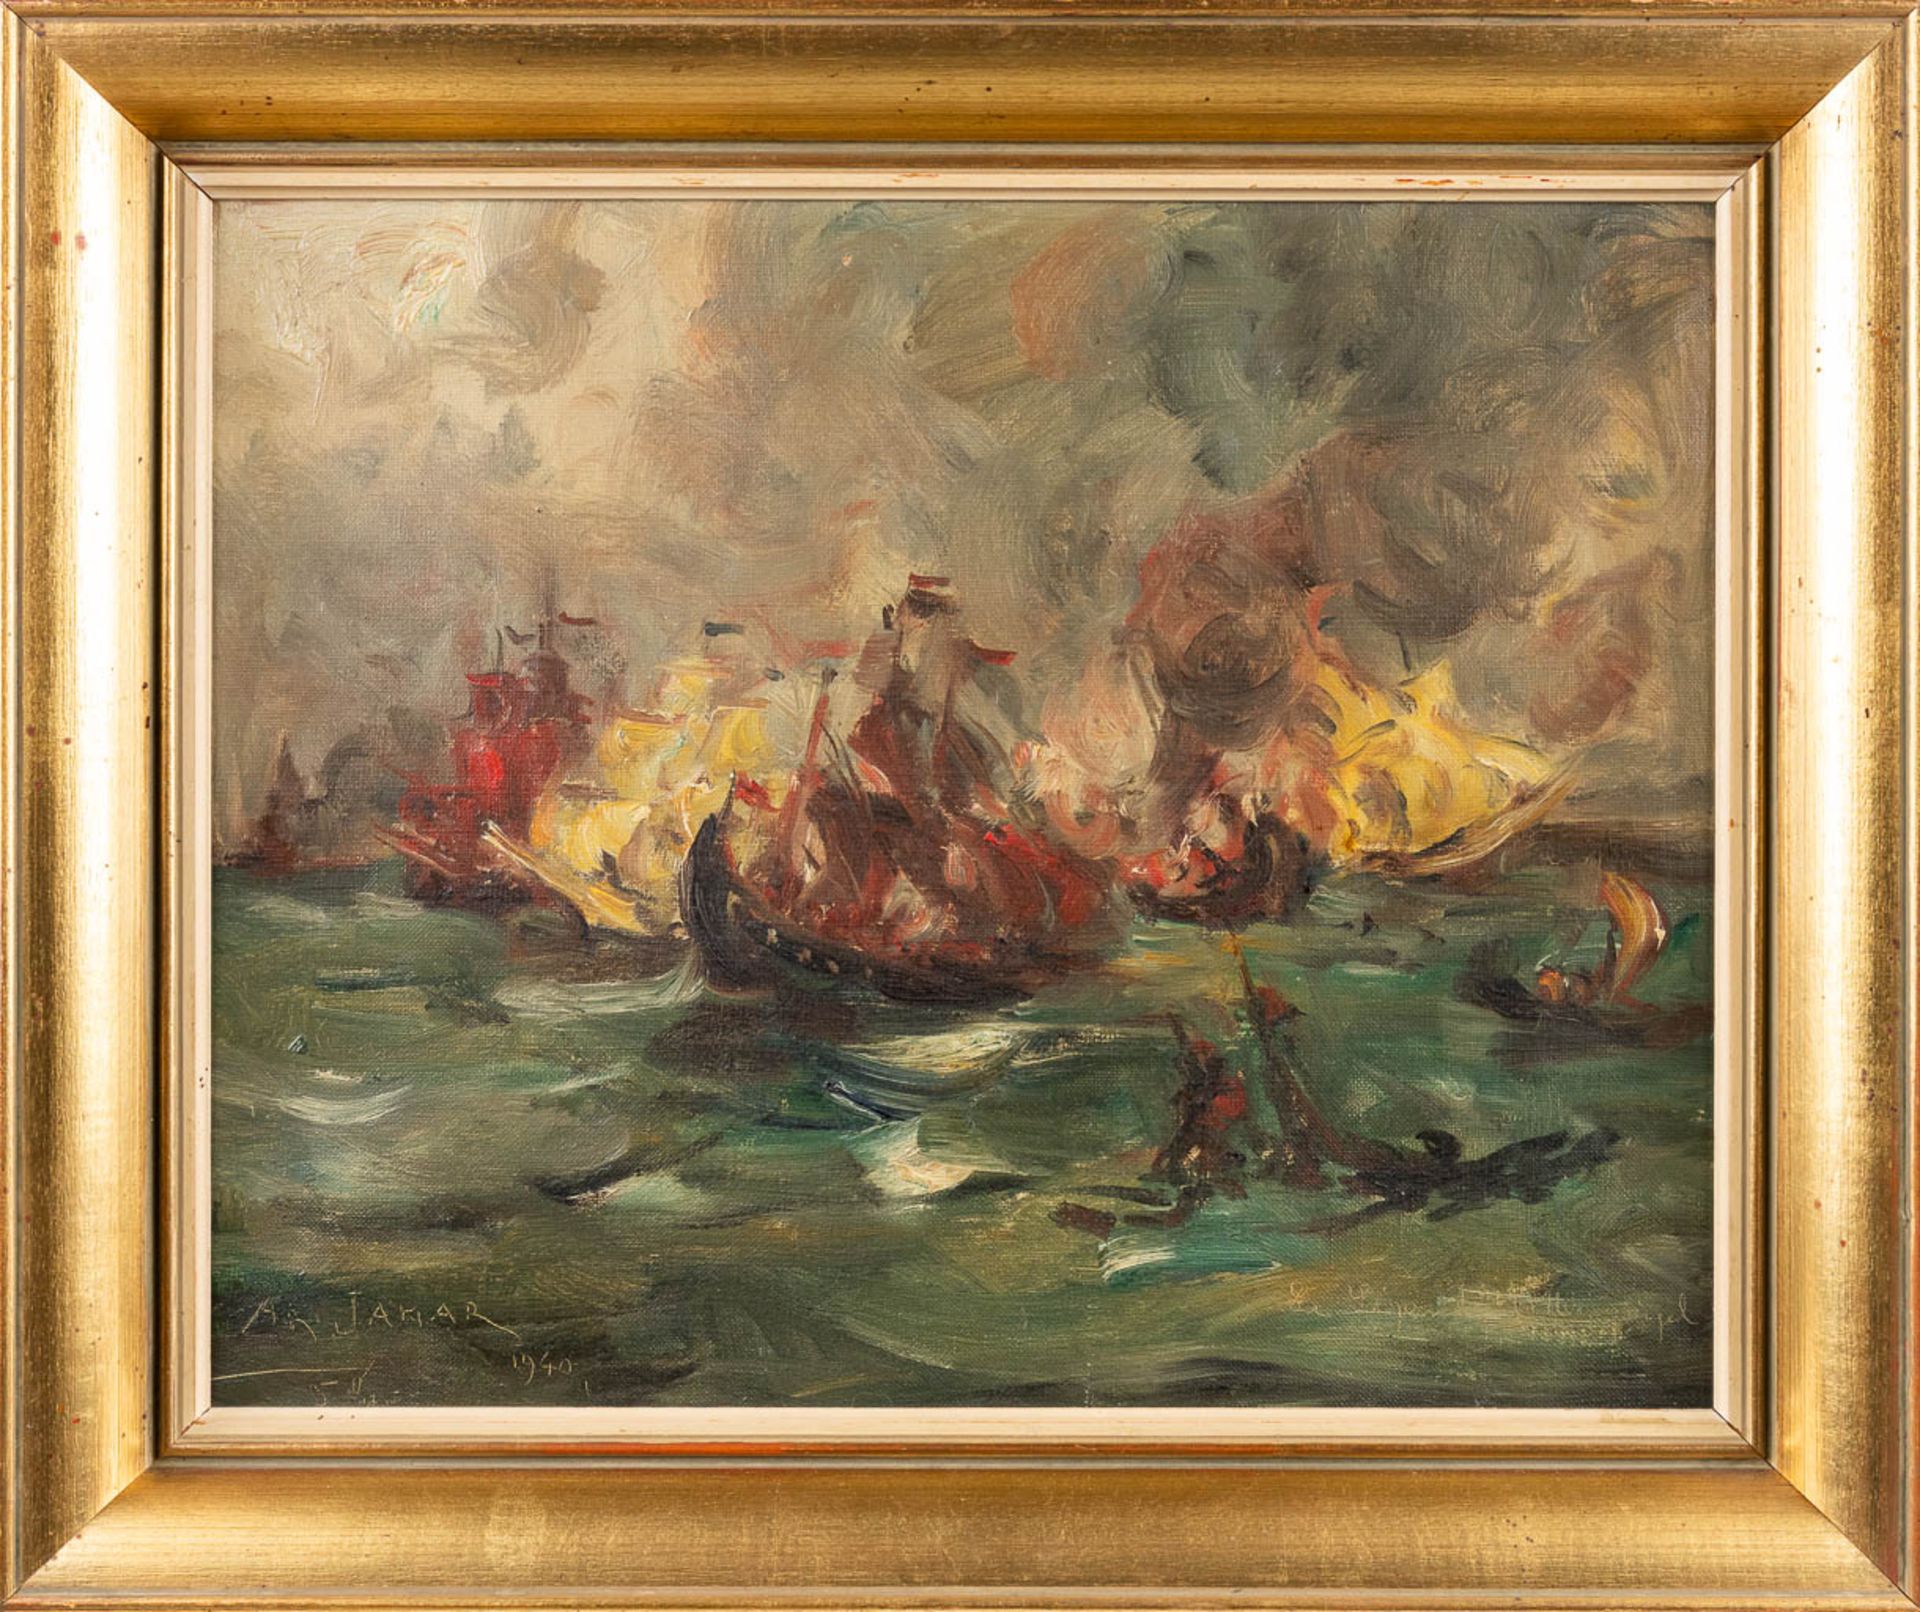 ArmandÊJAMAR (1870-1946) 'La Legende De Tijl Uylenspiegel' oil on canvas. 1940 (46 x 37cm) - Image 4 of 8